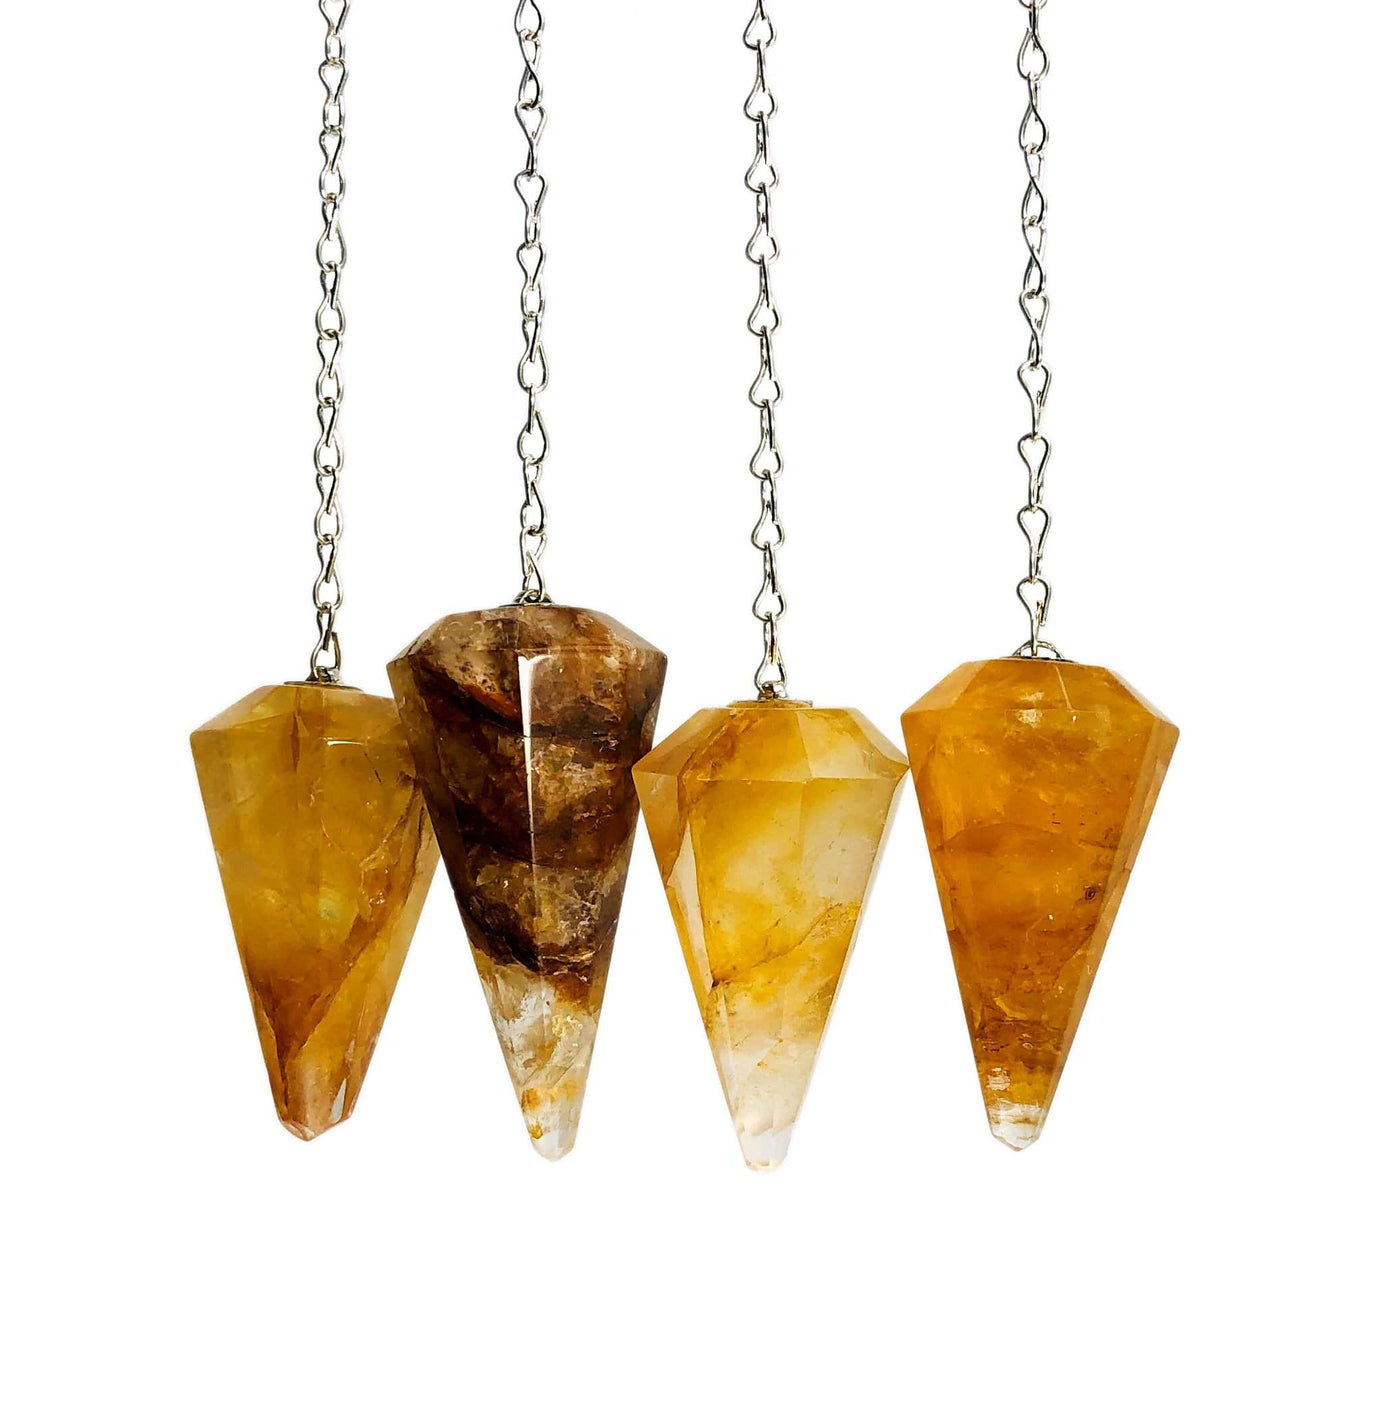 4 golden healer quartz pendulums on white background